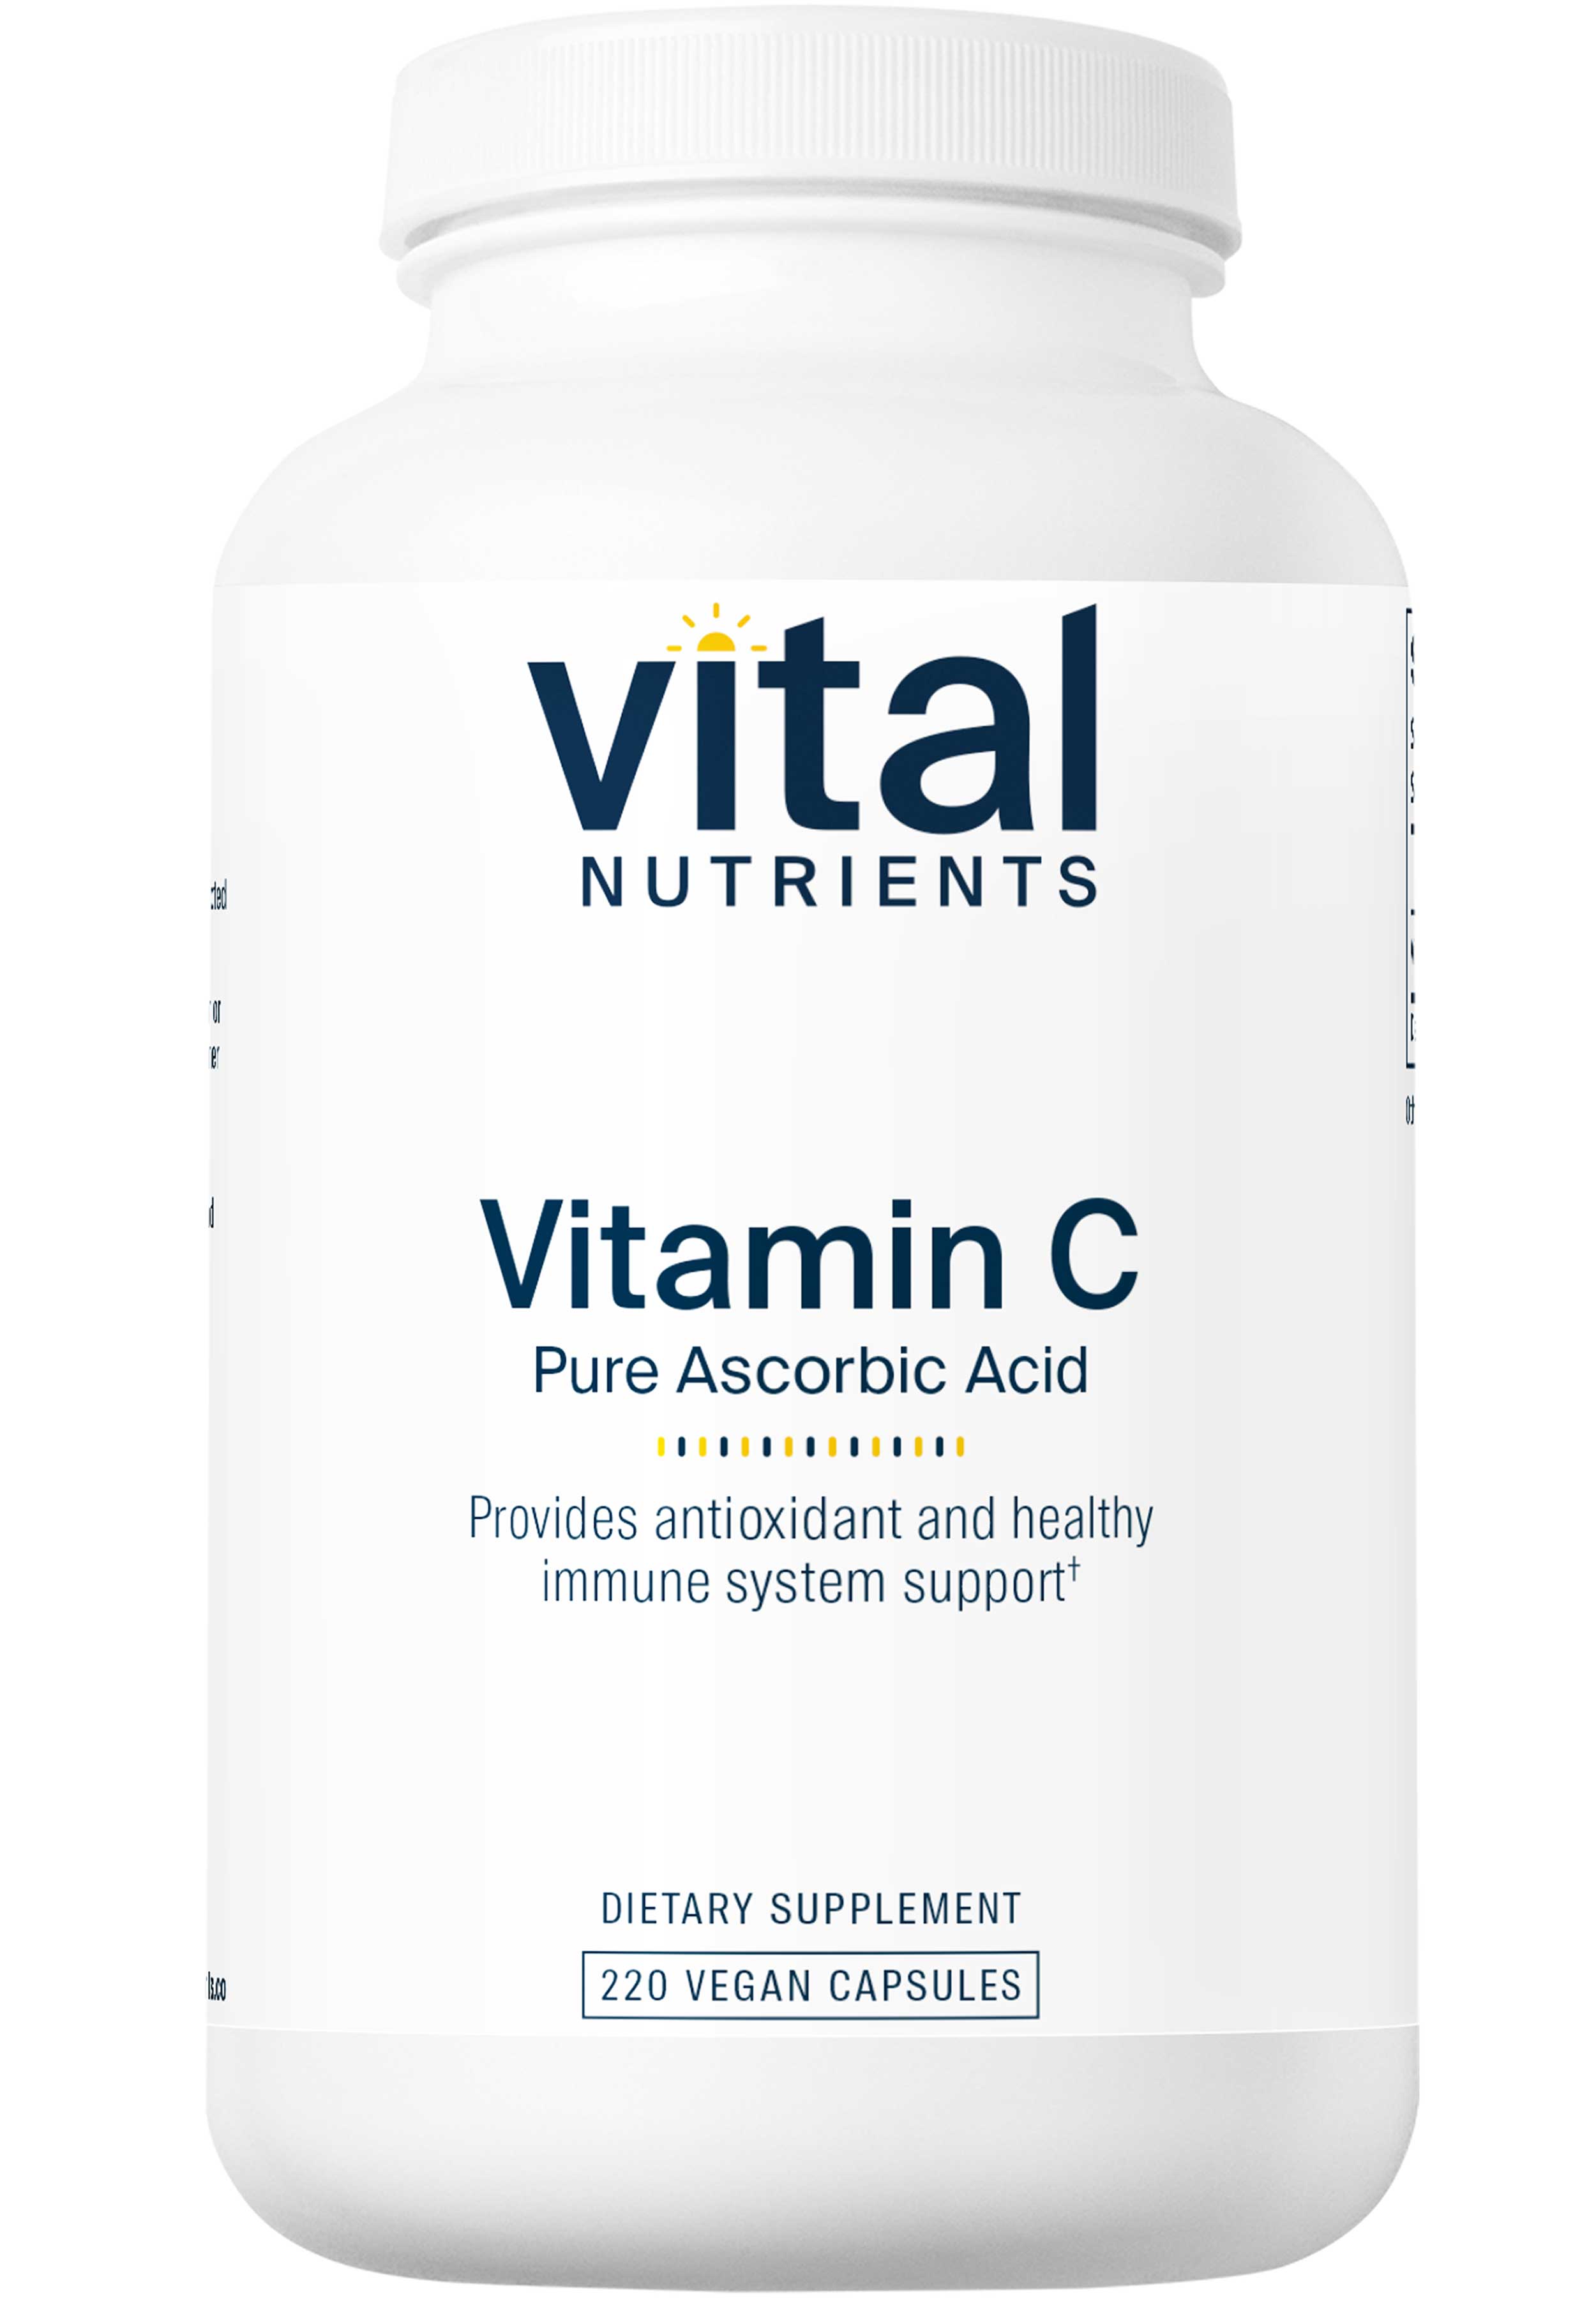 Vital Nutrients Vitamin C Veg Caps (100% Pure Ascorbic Acid)